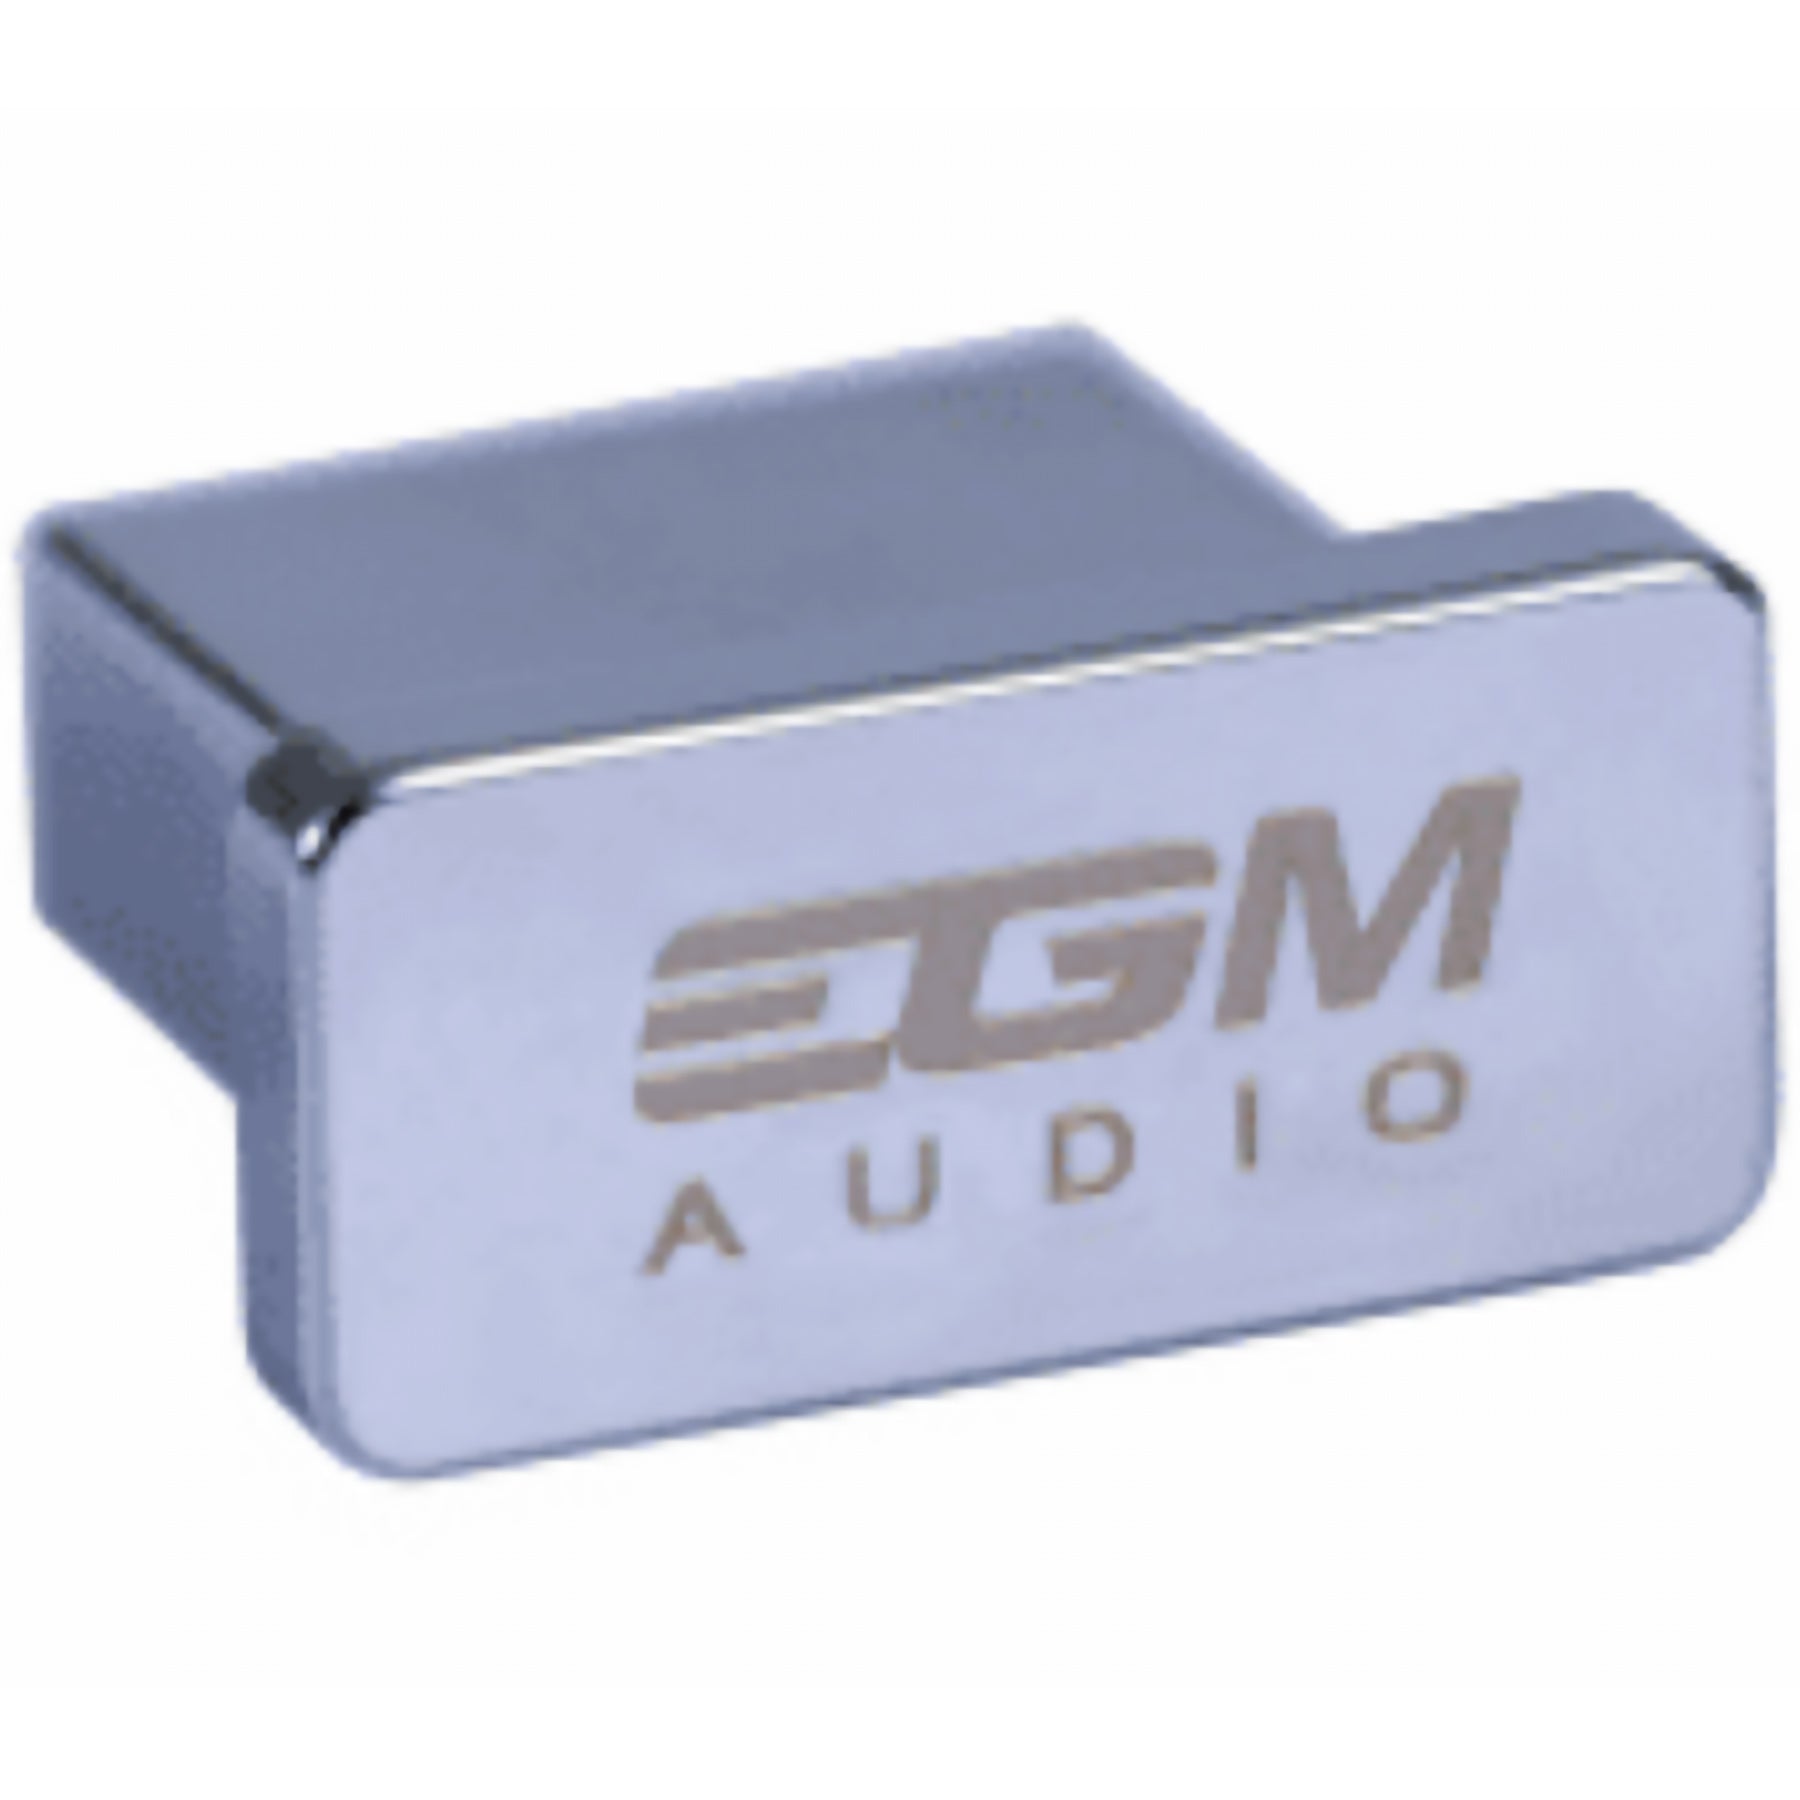 EGM Audio Rhodium Plated USB Noise Stopper (4 pack)